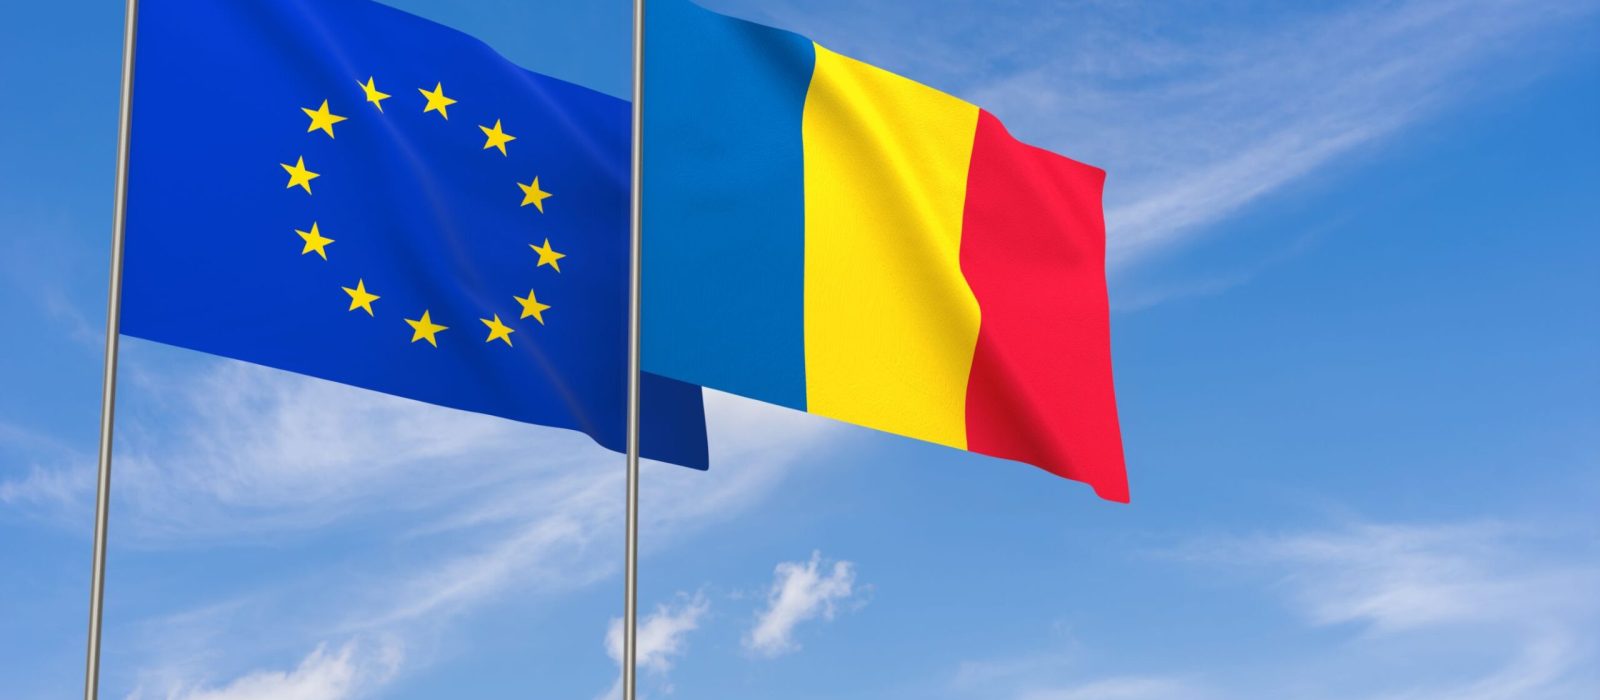 european-union-romania-flags-blue-sky-background-3d-illustration